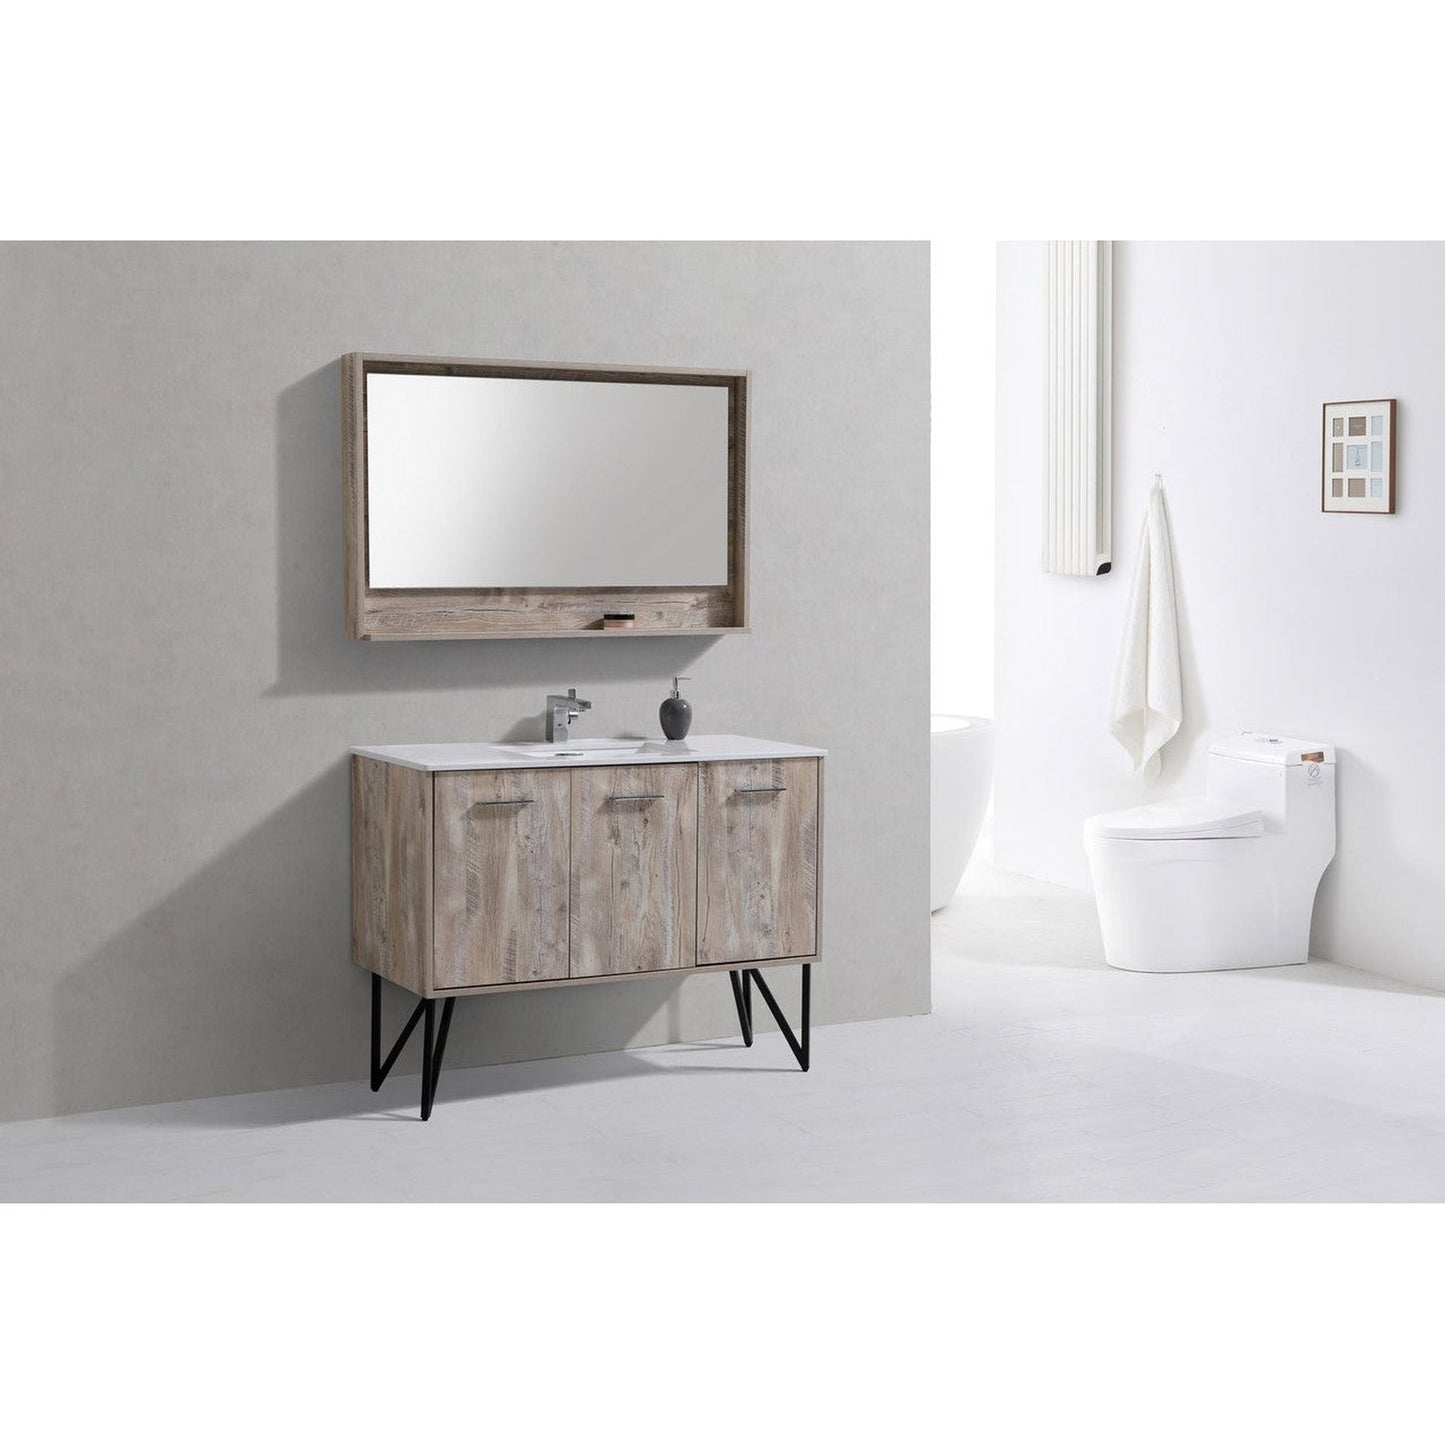 KubeBath Bosco 48" Nature Wood Modern Freestanding Bathroom Vanity With Single Undermount Sink With Overflow